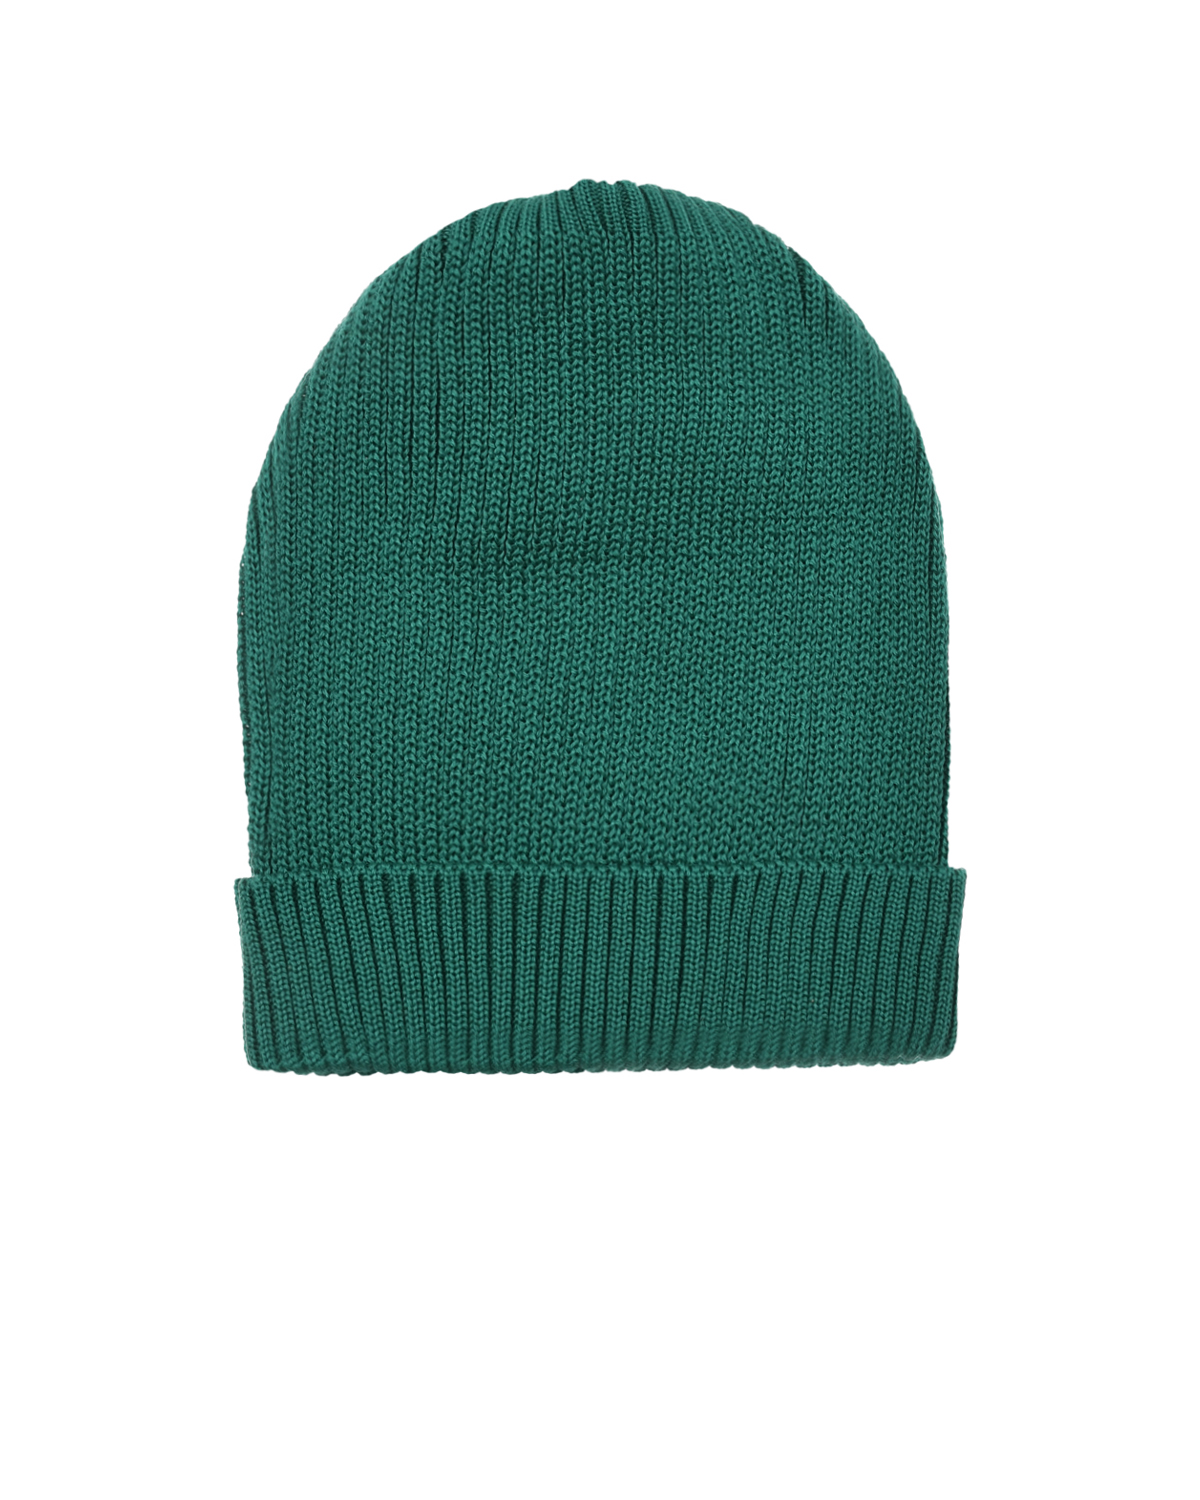 Зеленая шапка с отворотом Catya шапка с отворотом зеленая il trenino